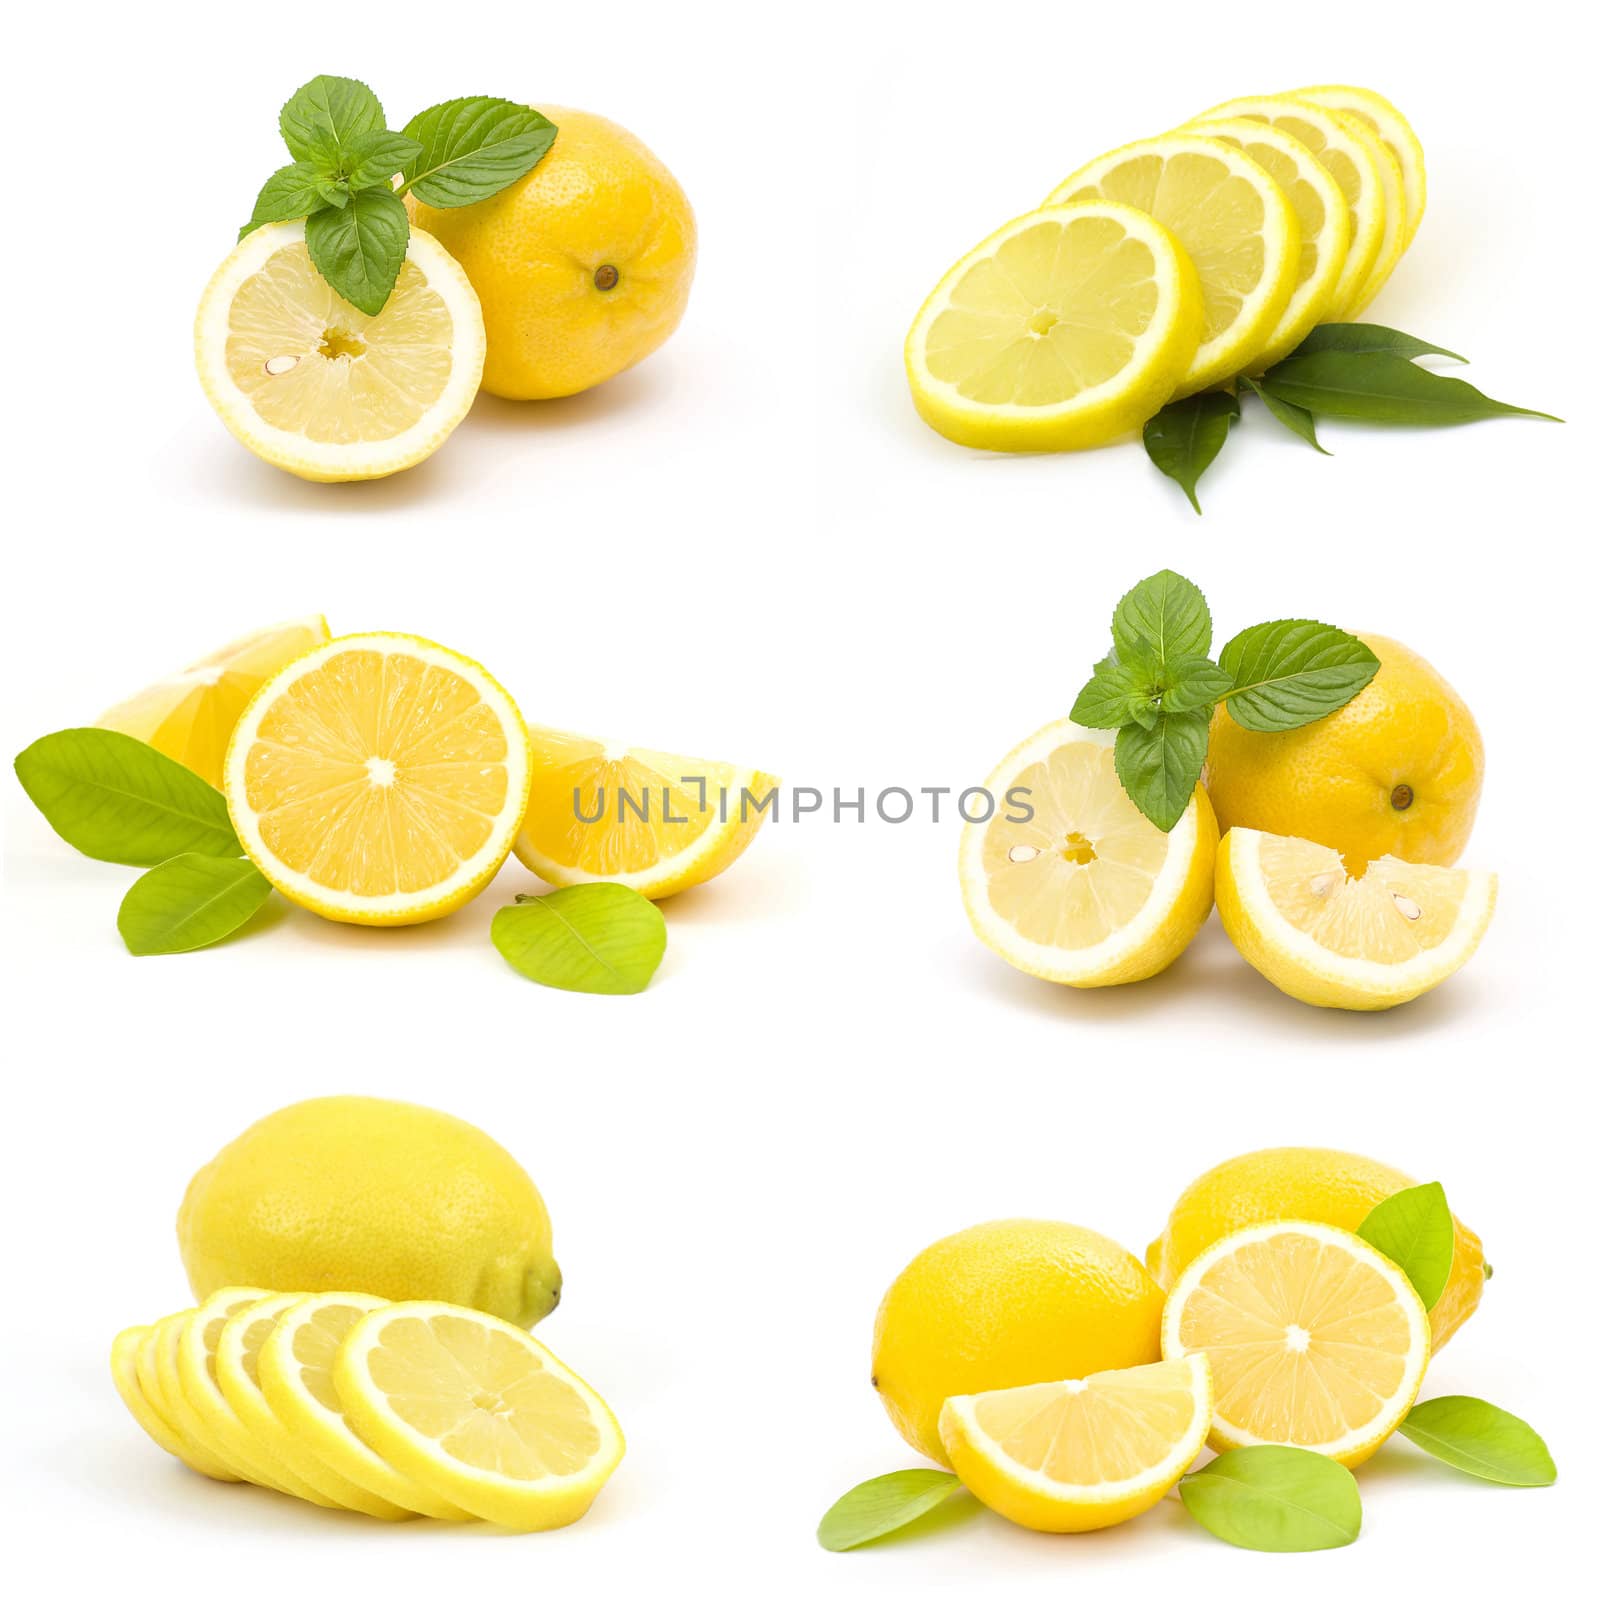 collection of fresh lemons